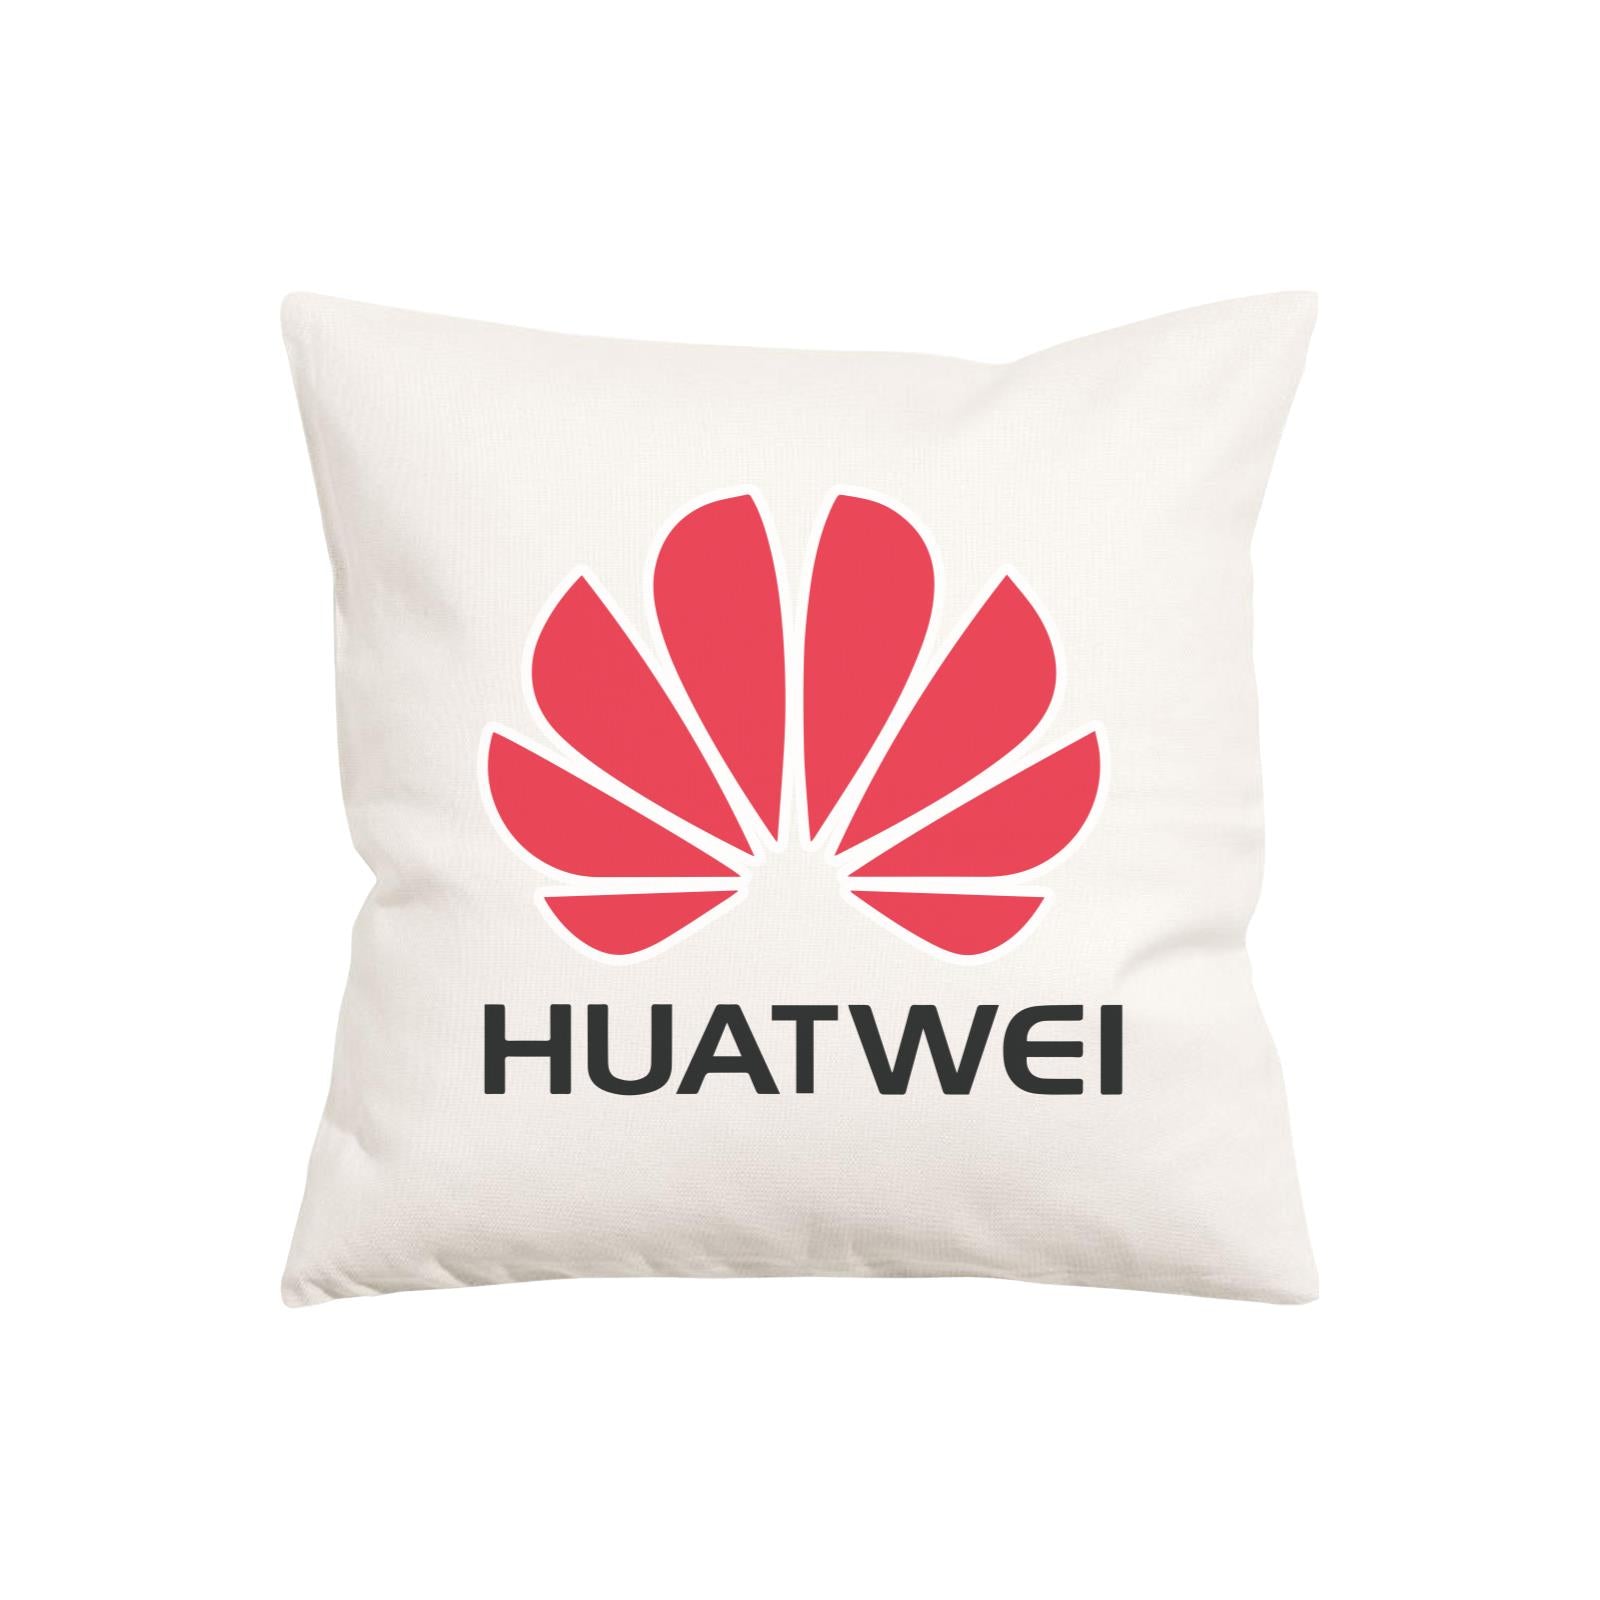 Slang Statement Huat Wei Pillow Cushion